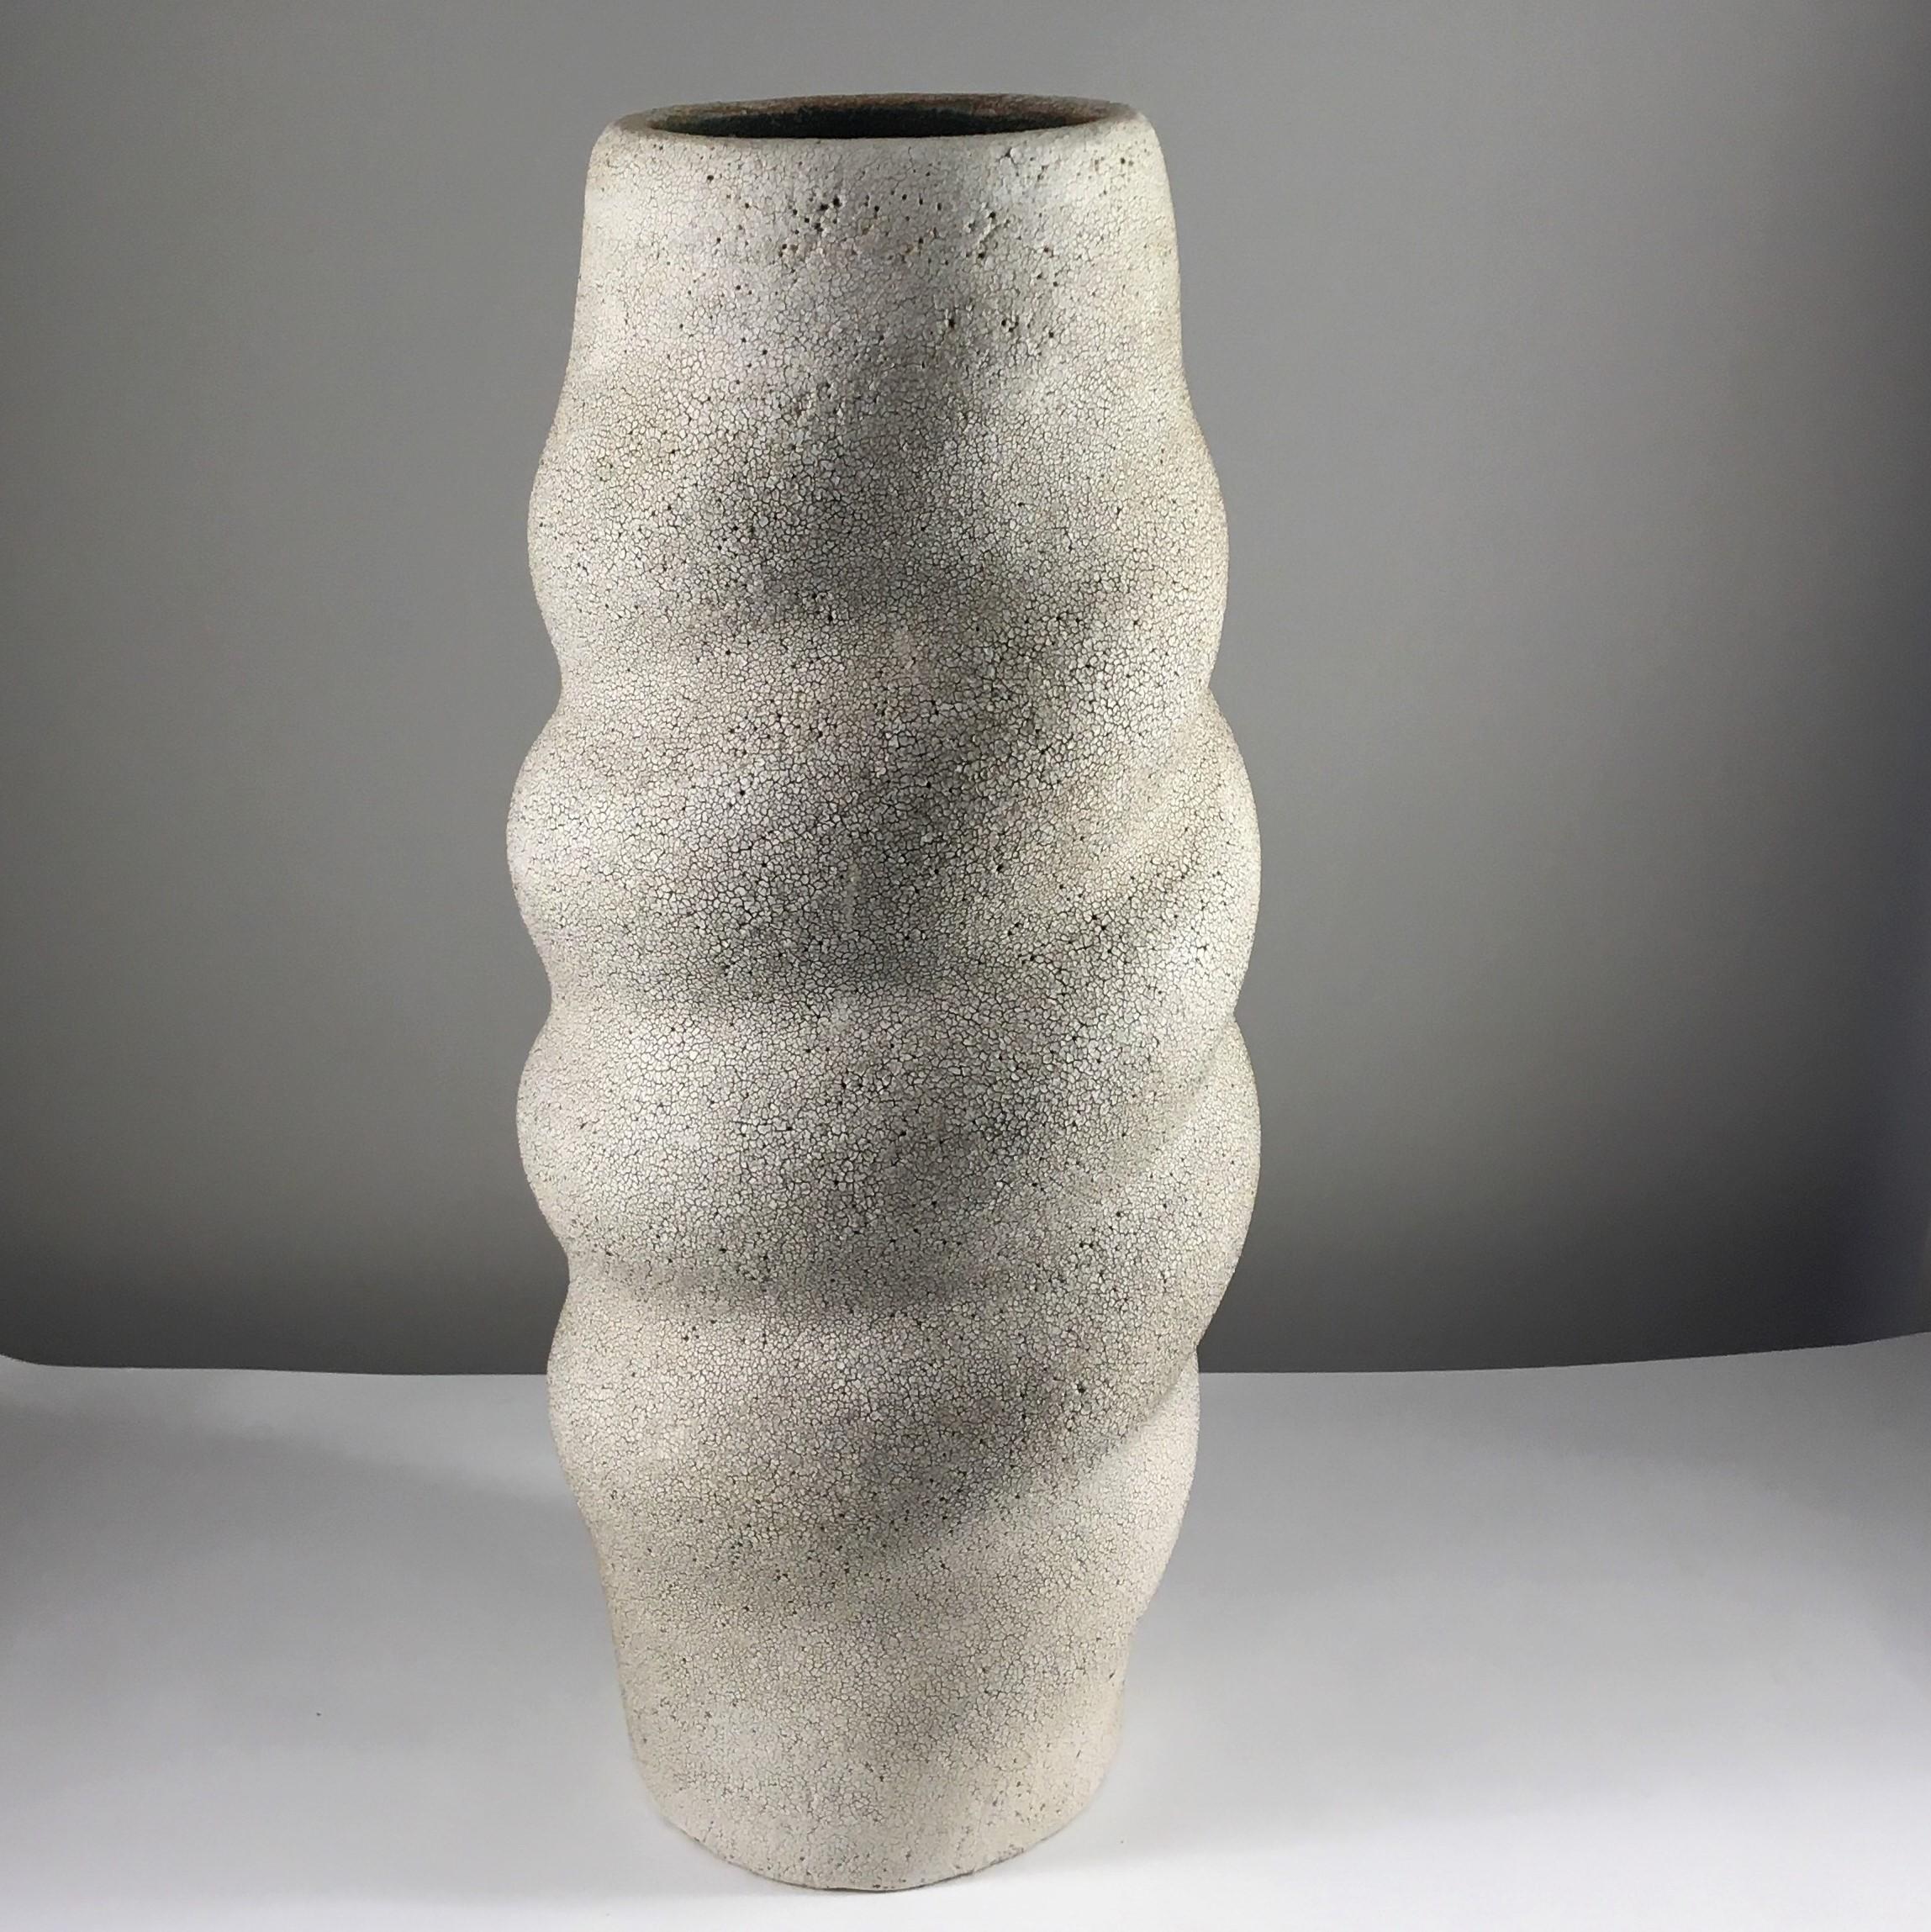 Scuptural Spiral Vase #2 by Yumiko Kuga. Dimensions: H 23